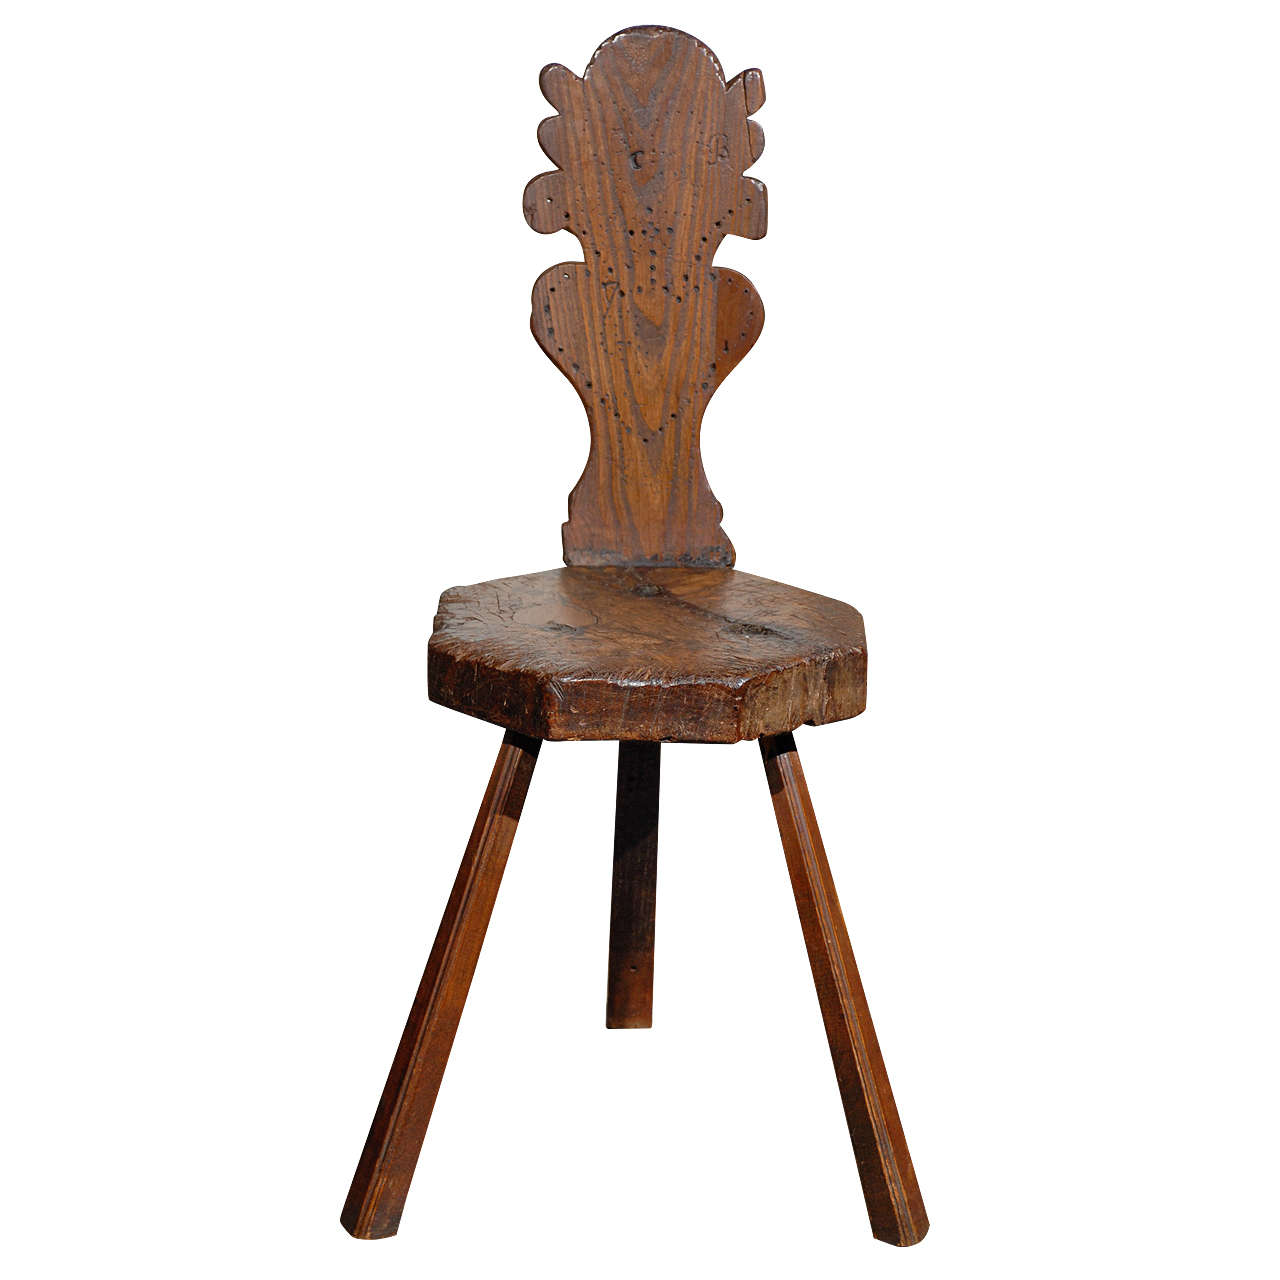 Italian Rustic Chair/Stool